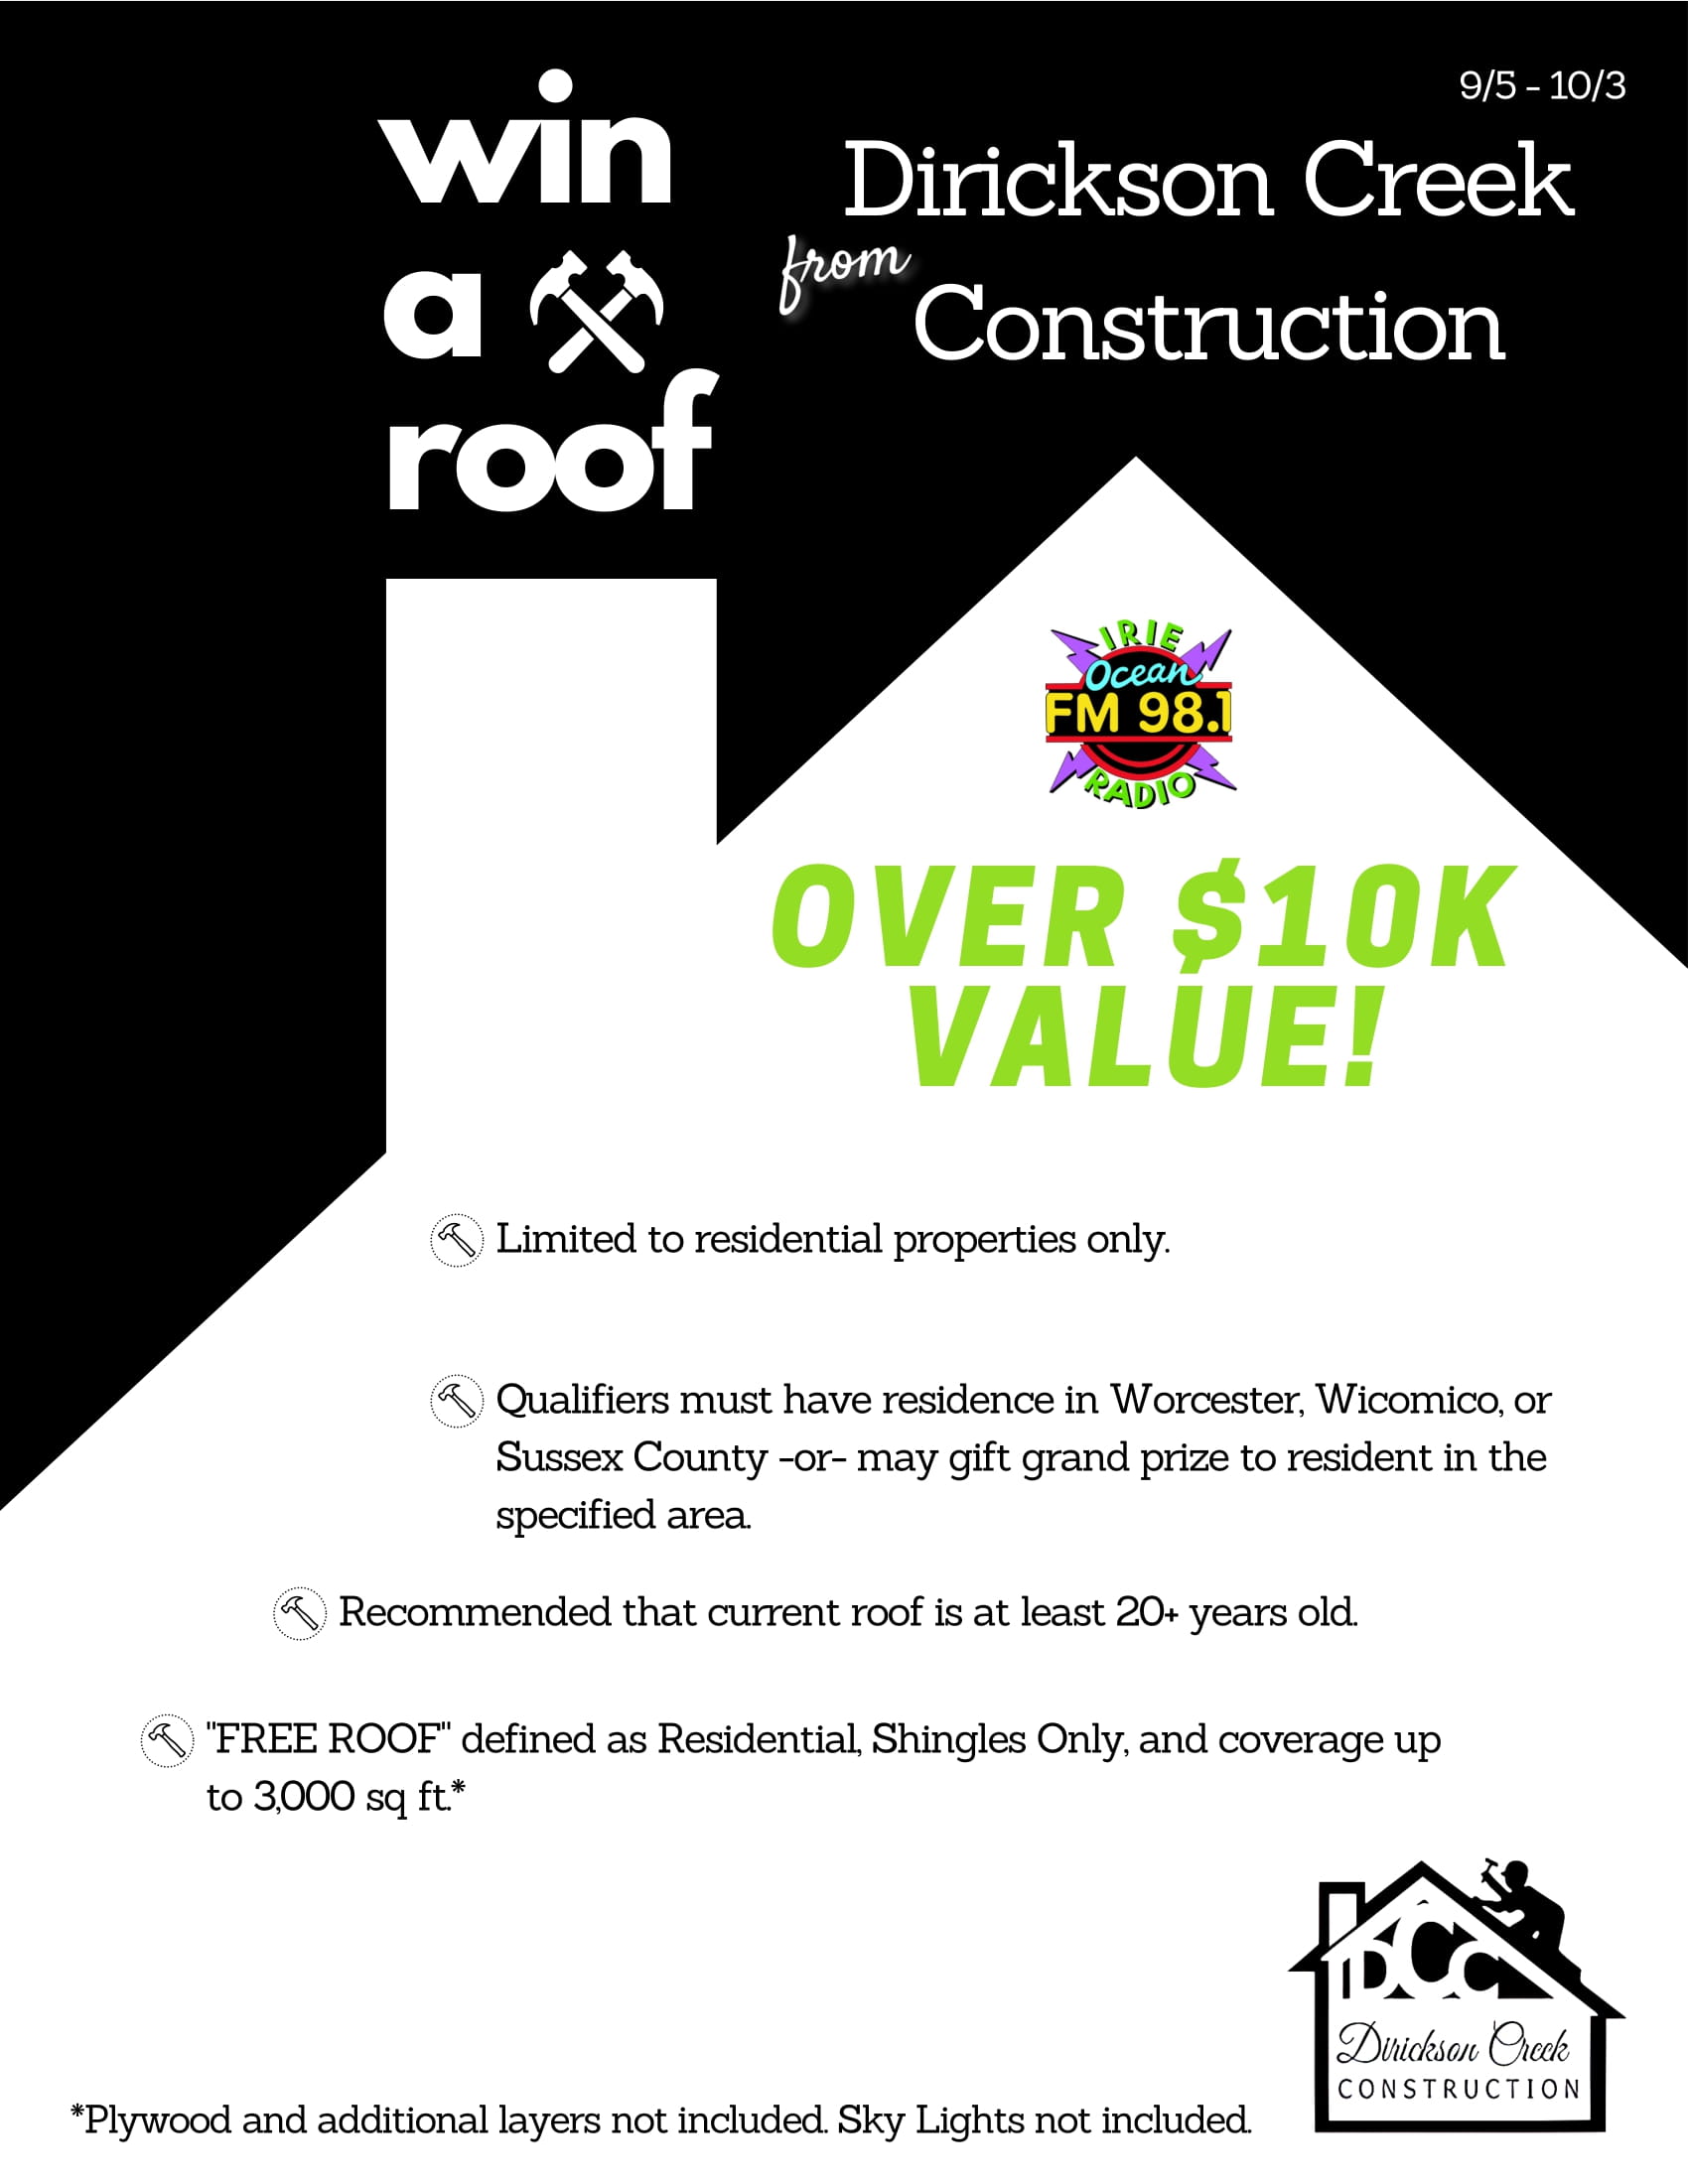 dcc-roof-giveaway-4-1.jpg